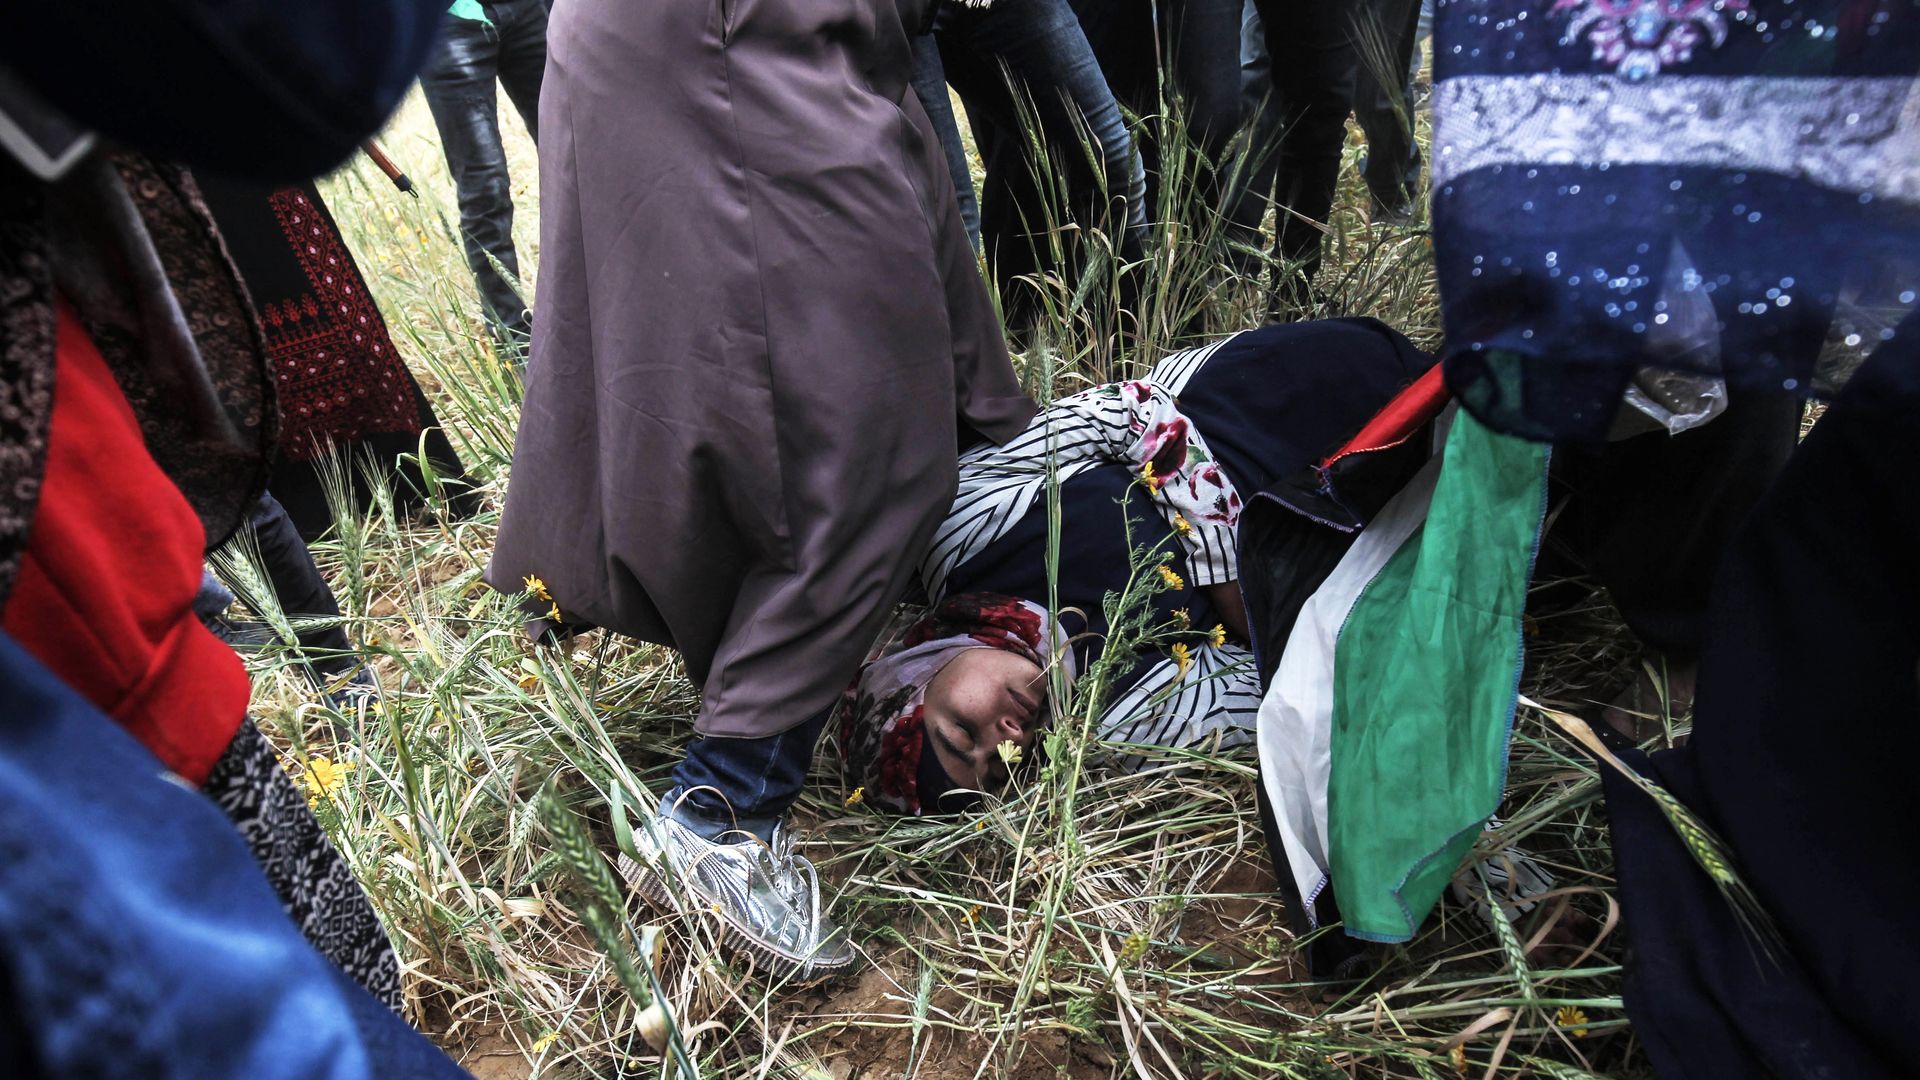 Injured Palestinian woman laying on the ground